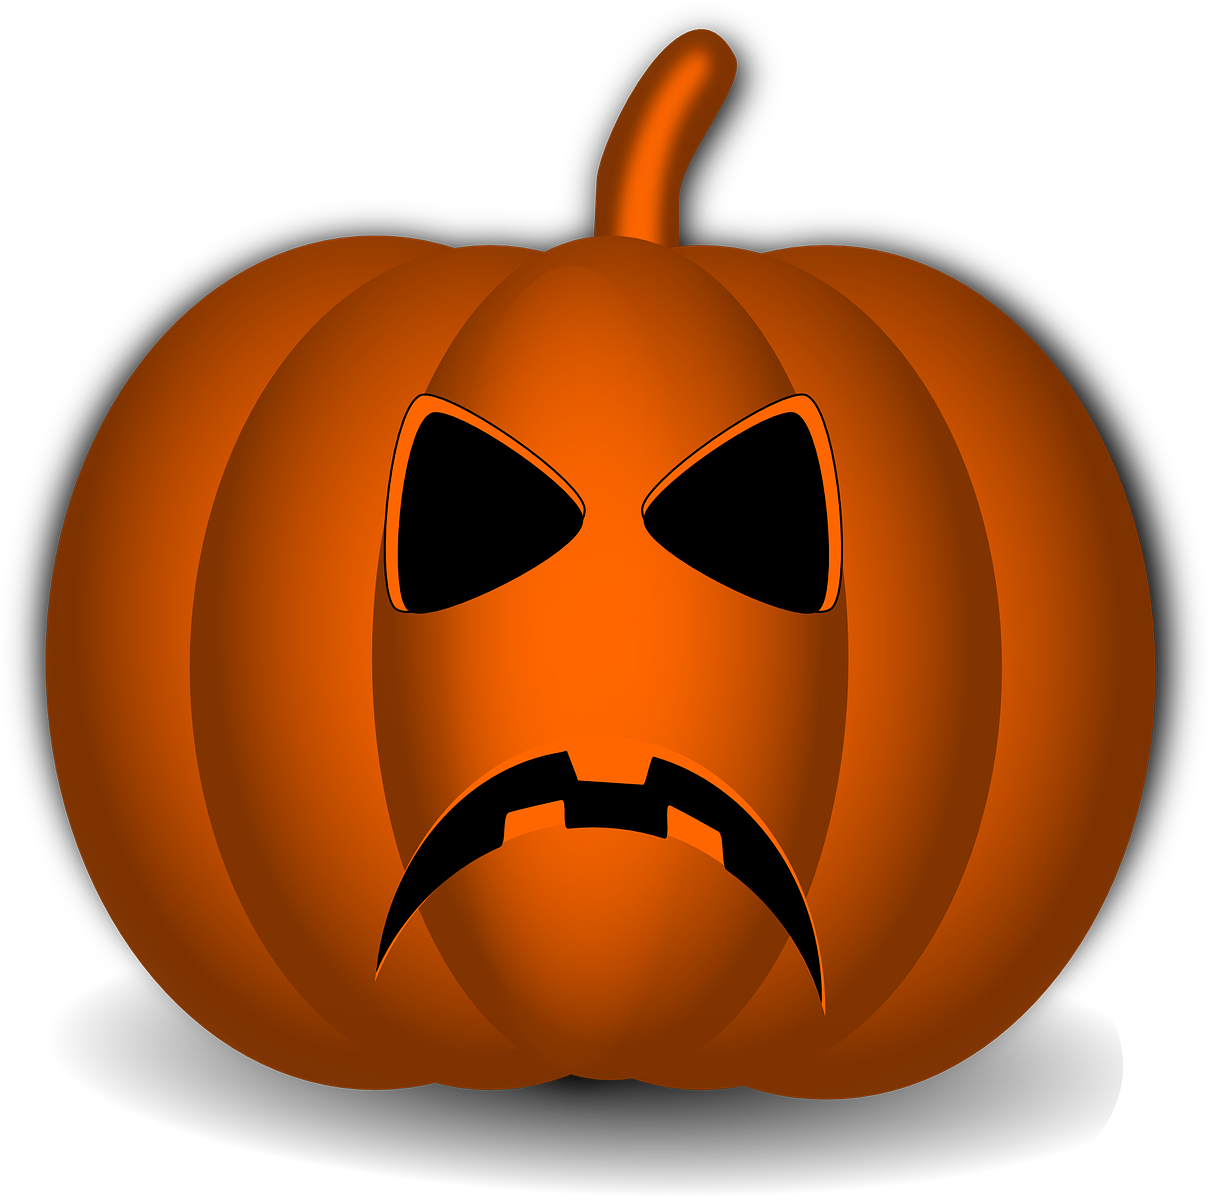 A Pumpkin With A Sad Face